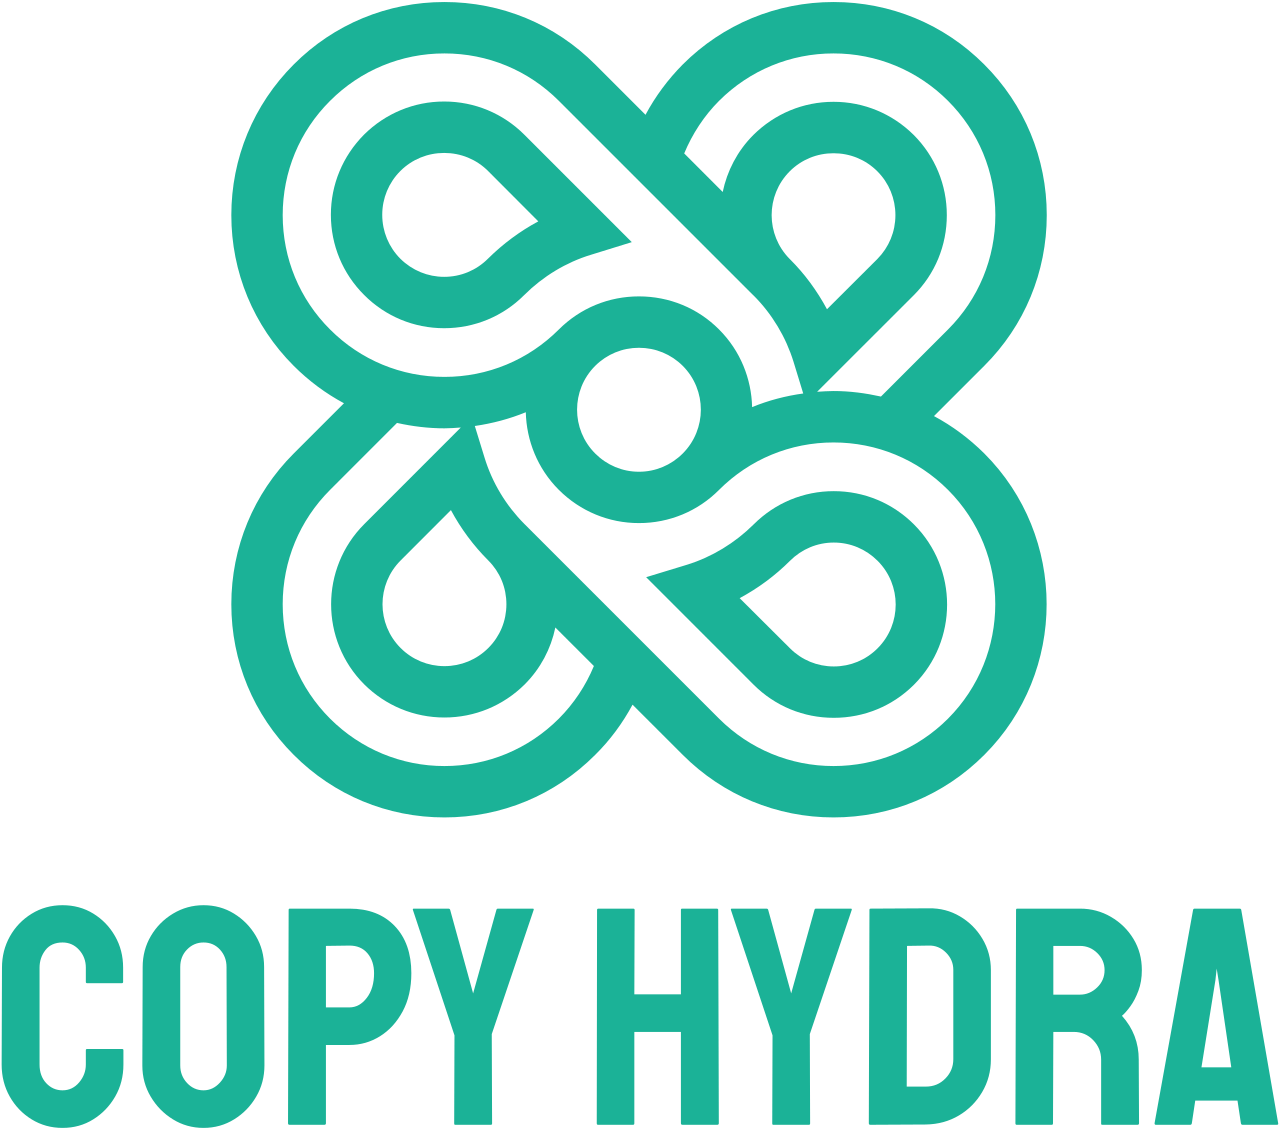 Copy Hydra's web page